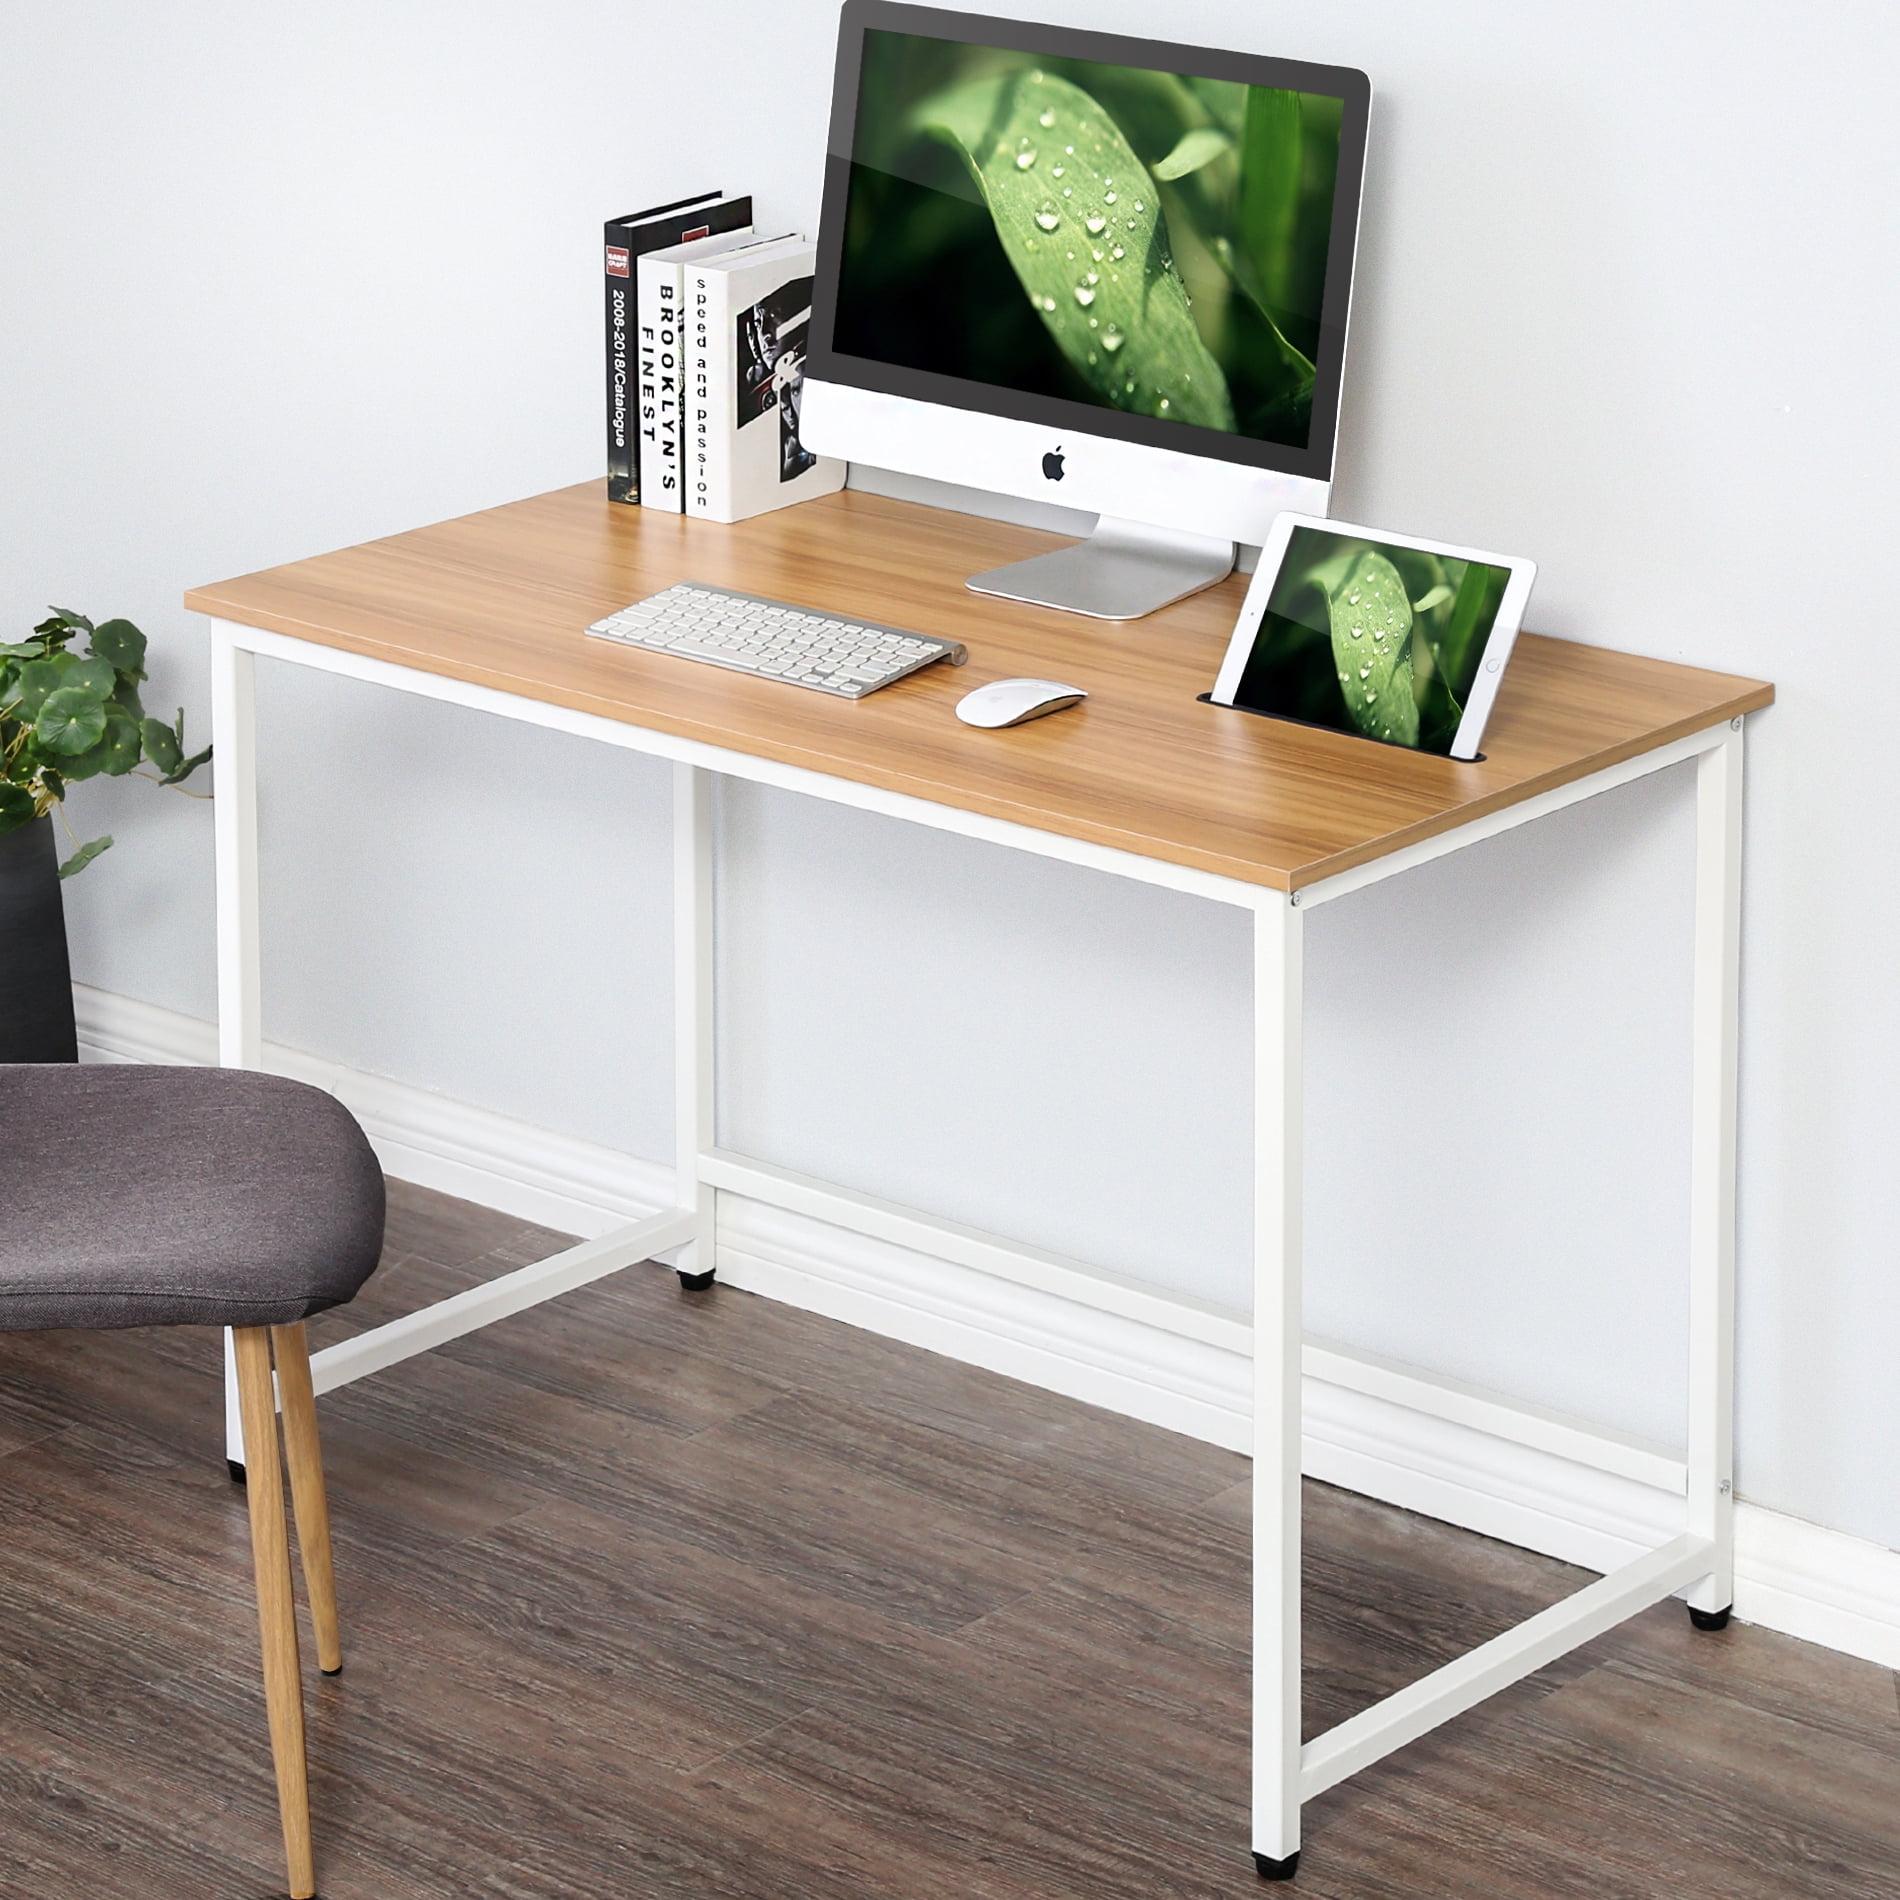 Desk Tribesigns rotating l-shaped computer desk, 55 inches modern corner